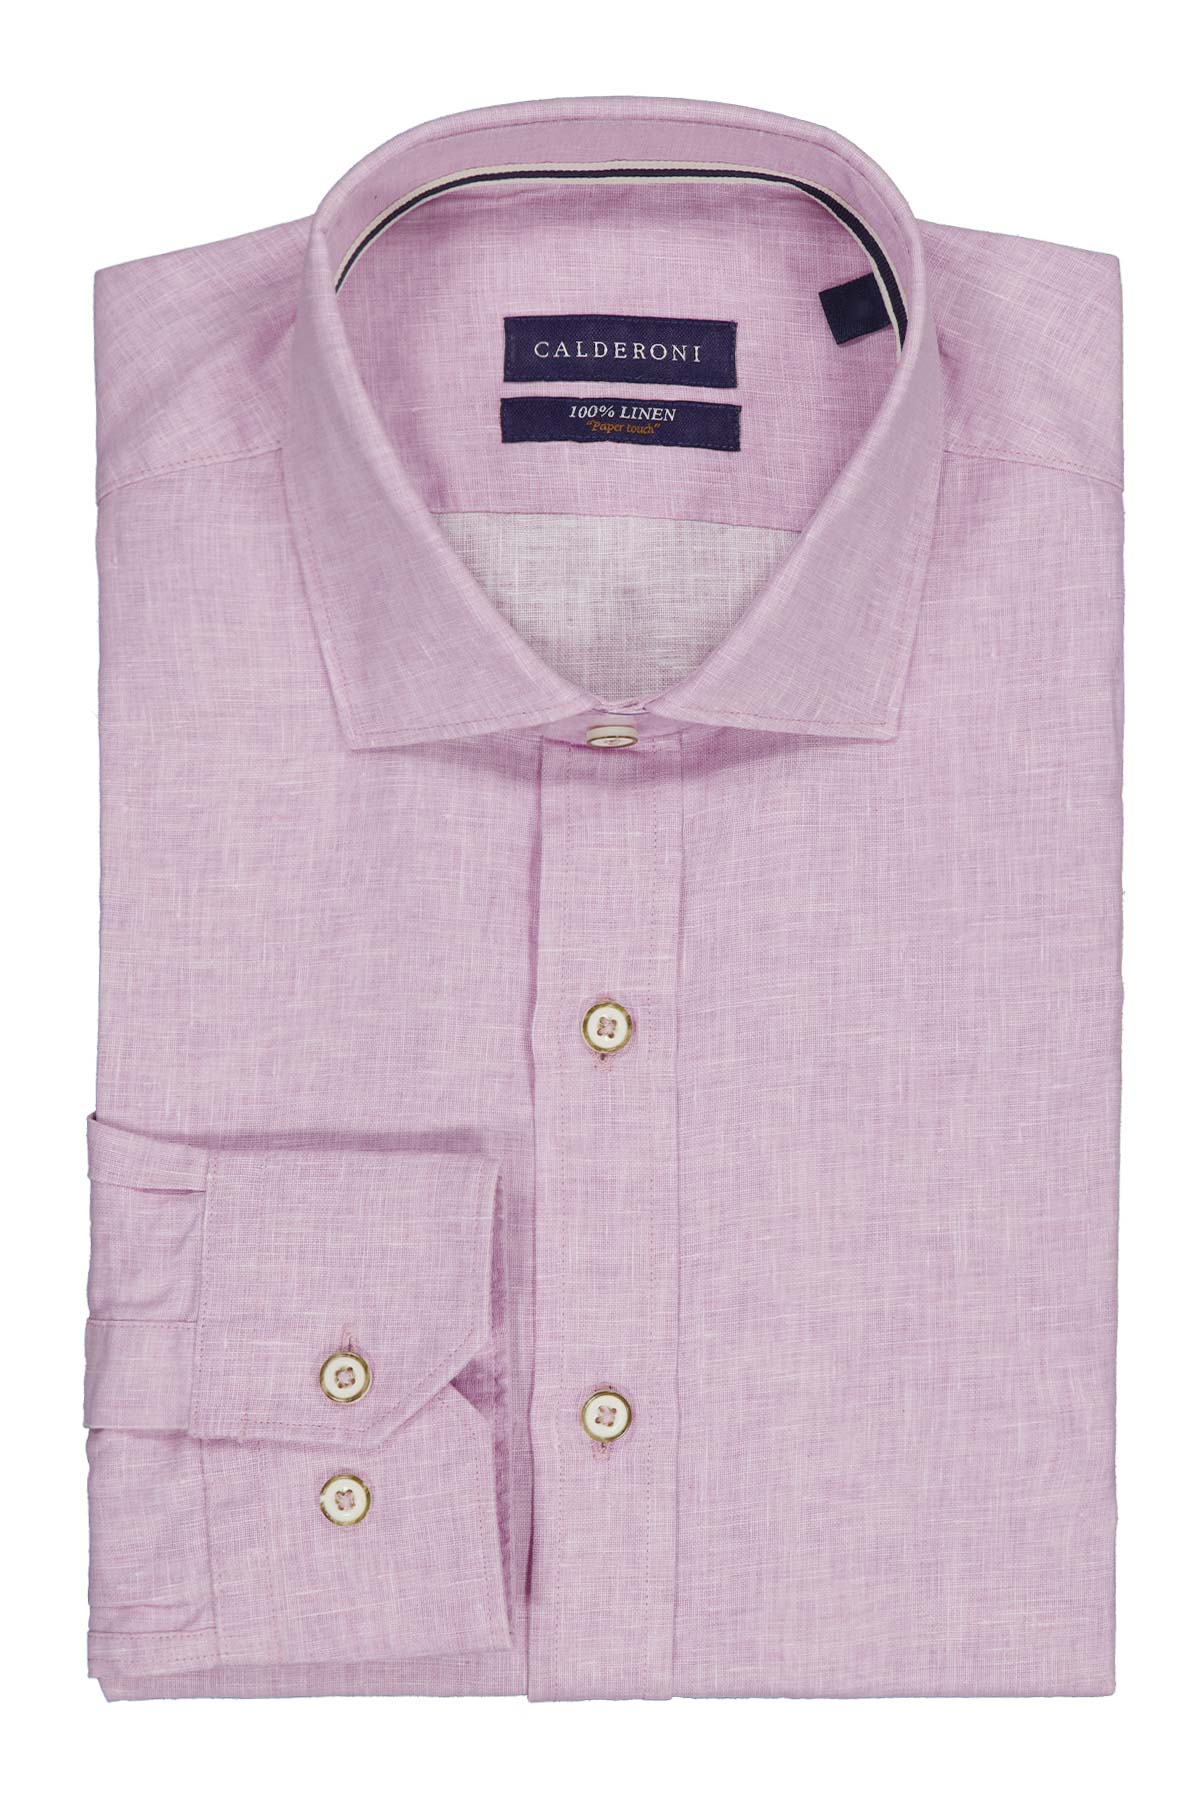 Camisa Casual LINEN Calderoni Rosa Contemporary Fit